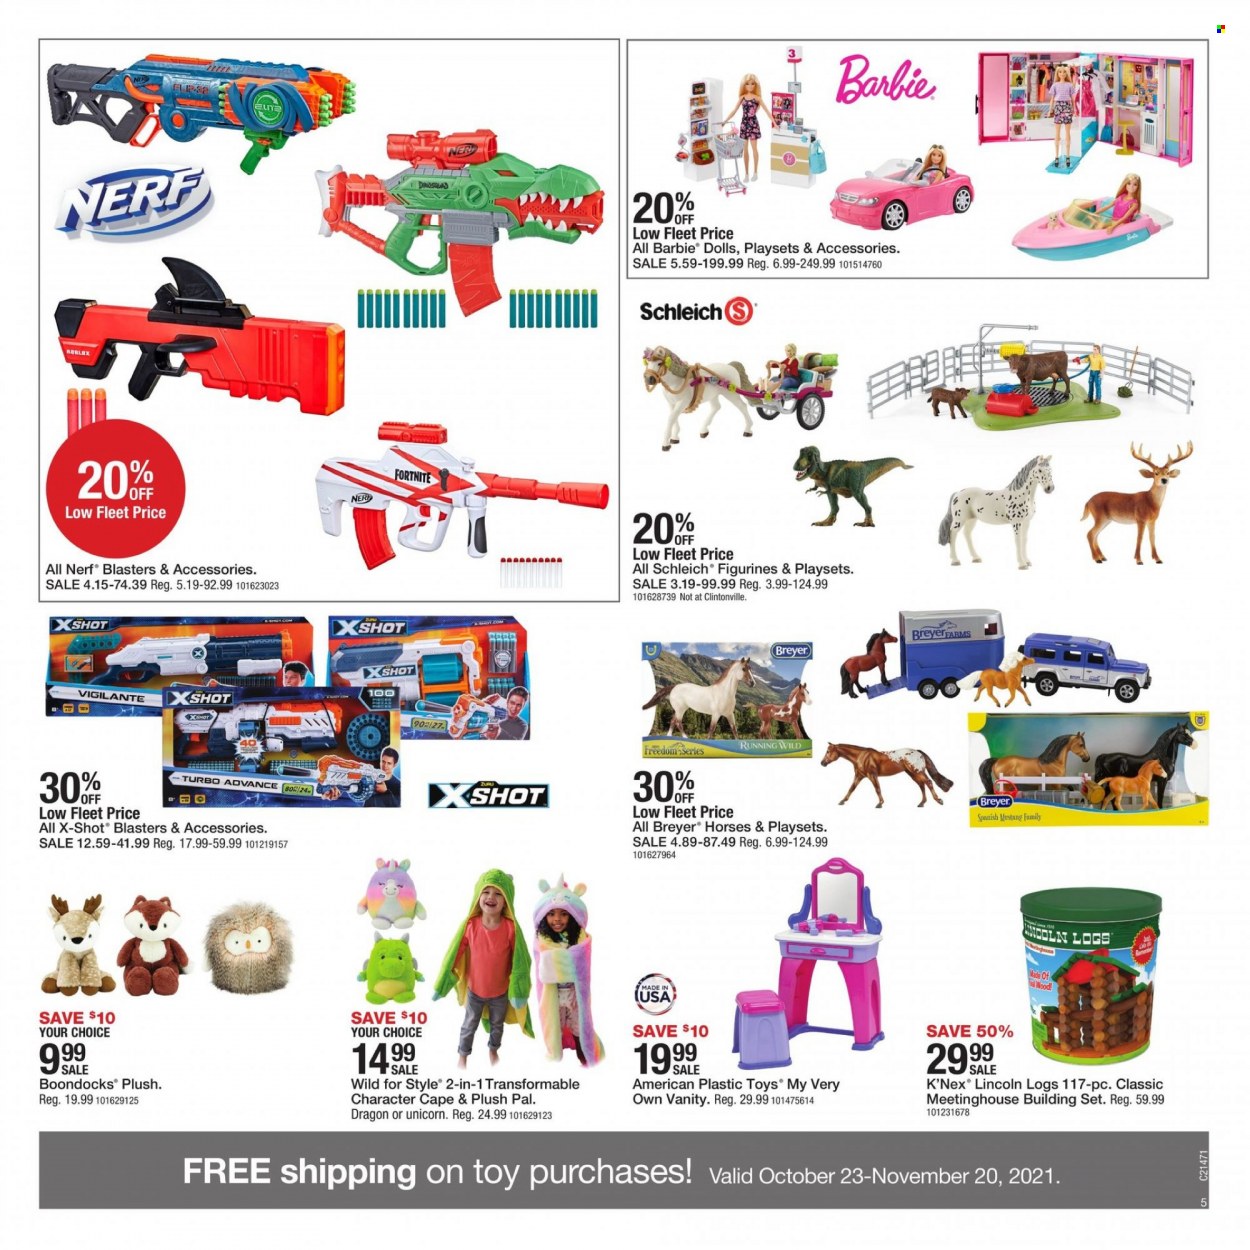 thumbnail - Fleet Farm Flyer - 11/19/2021 - 11/27/2021 - Sales products - Mustang, Barbie, Nerf, building set, doll, K'NEX, Lincoln Logs, Schleich, vanity, play set, toys, Breyer, Zuru, plush toy. Page 5.